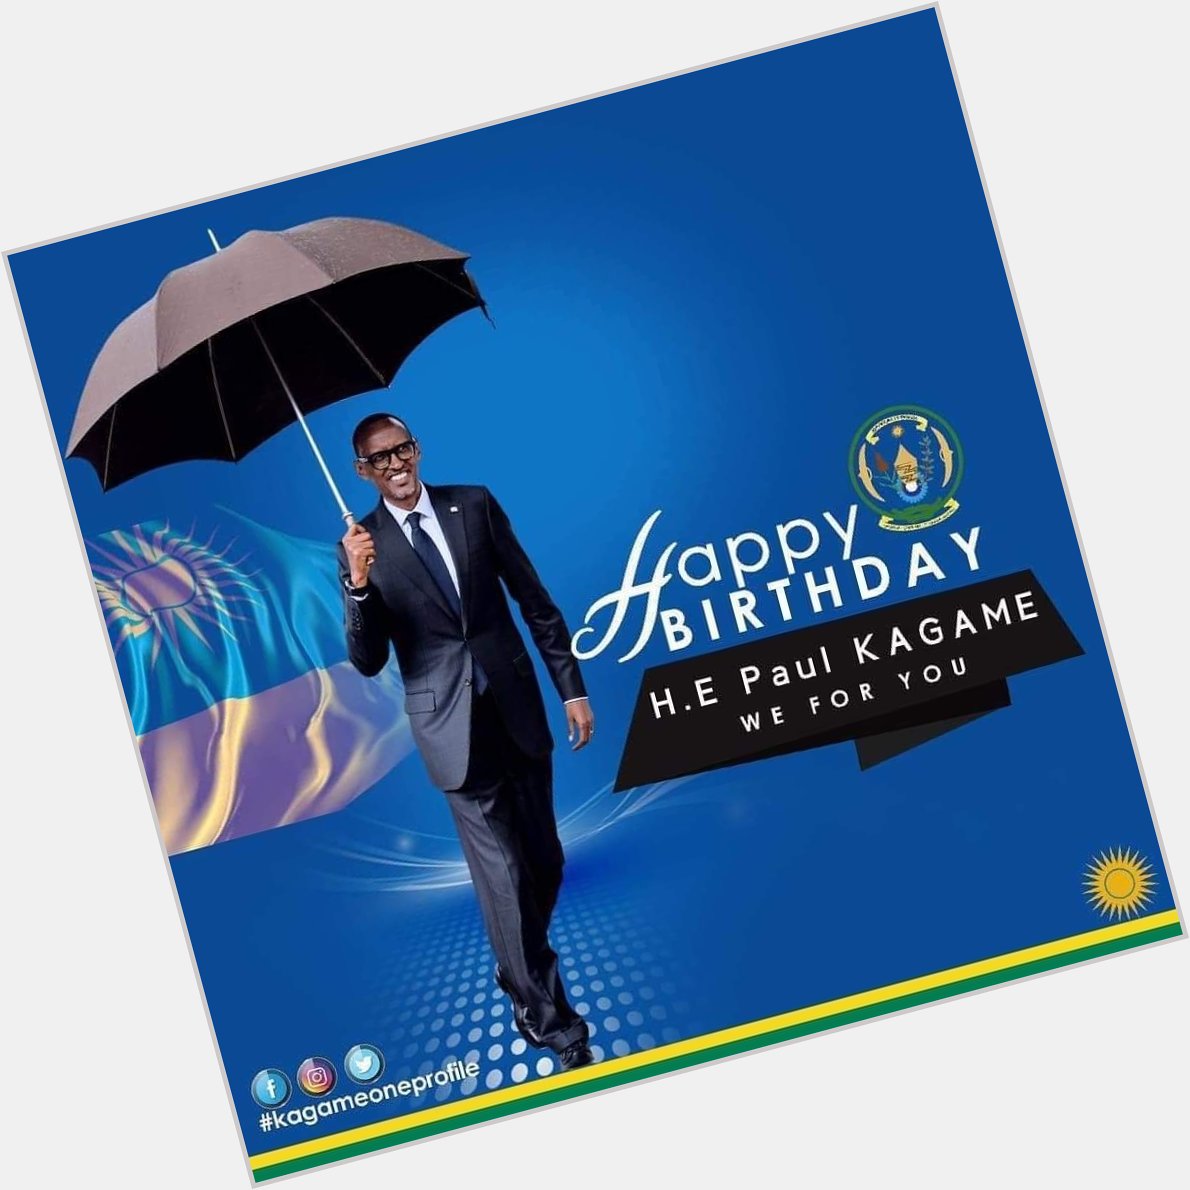 Happy birthday Paul Kagame 